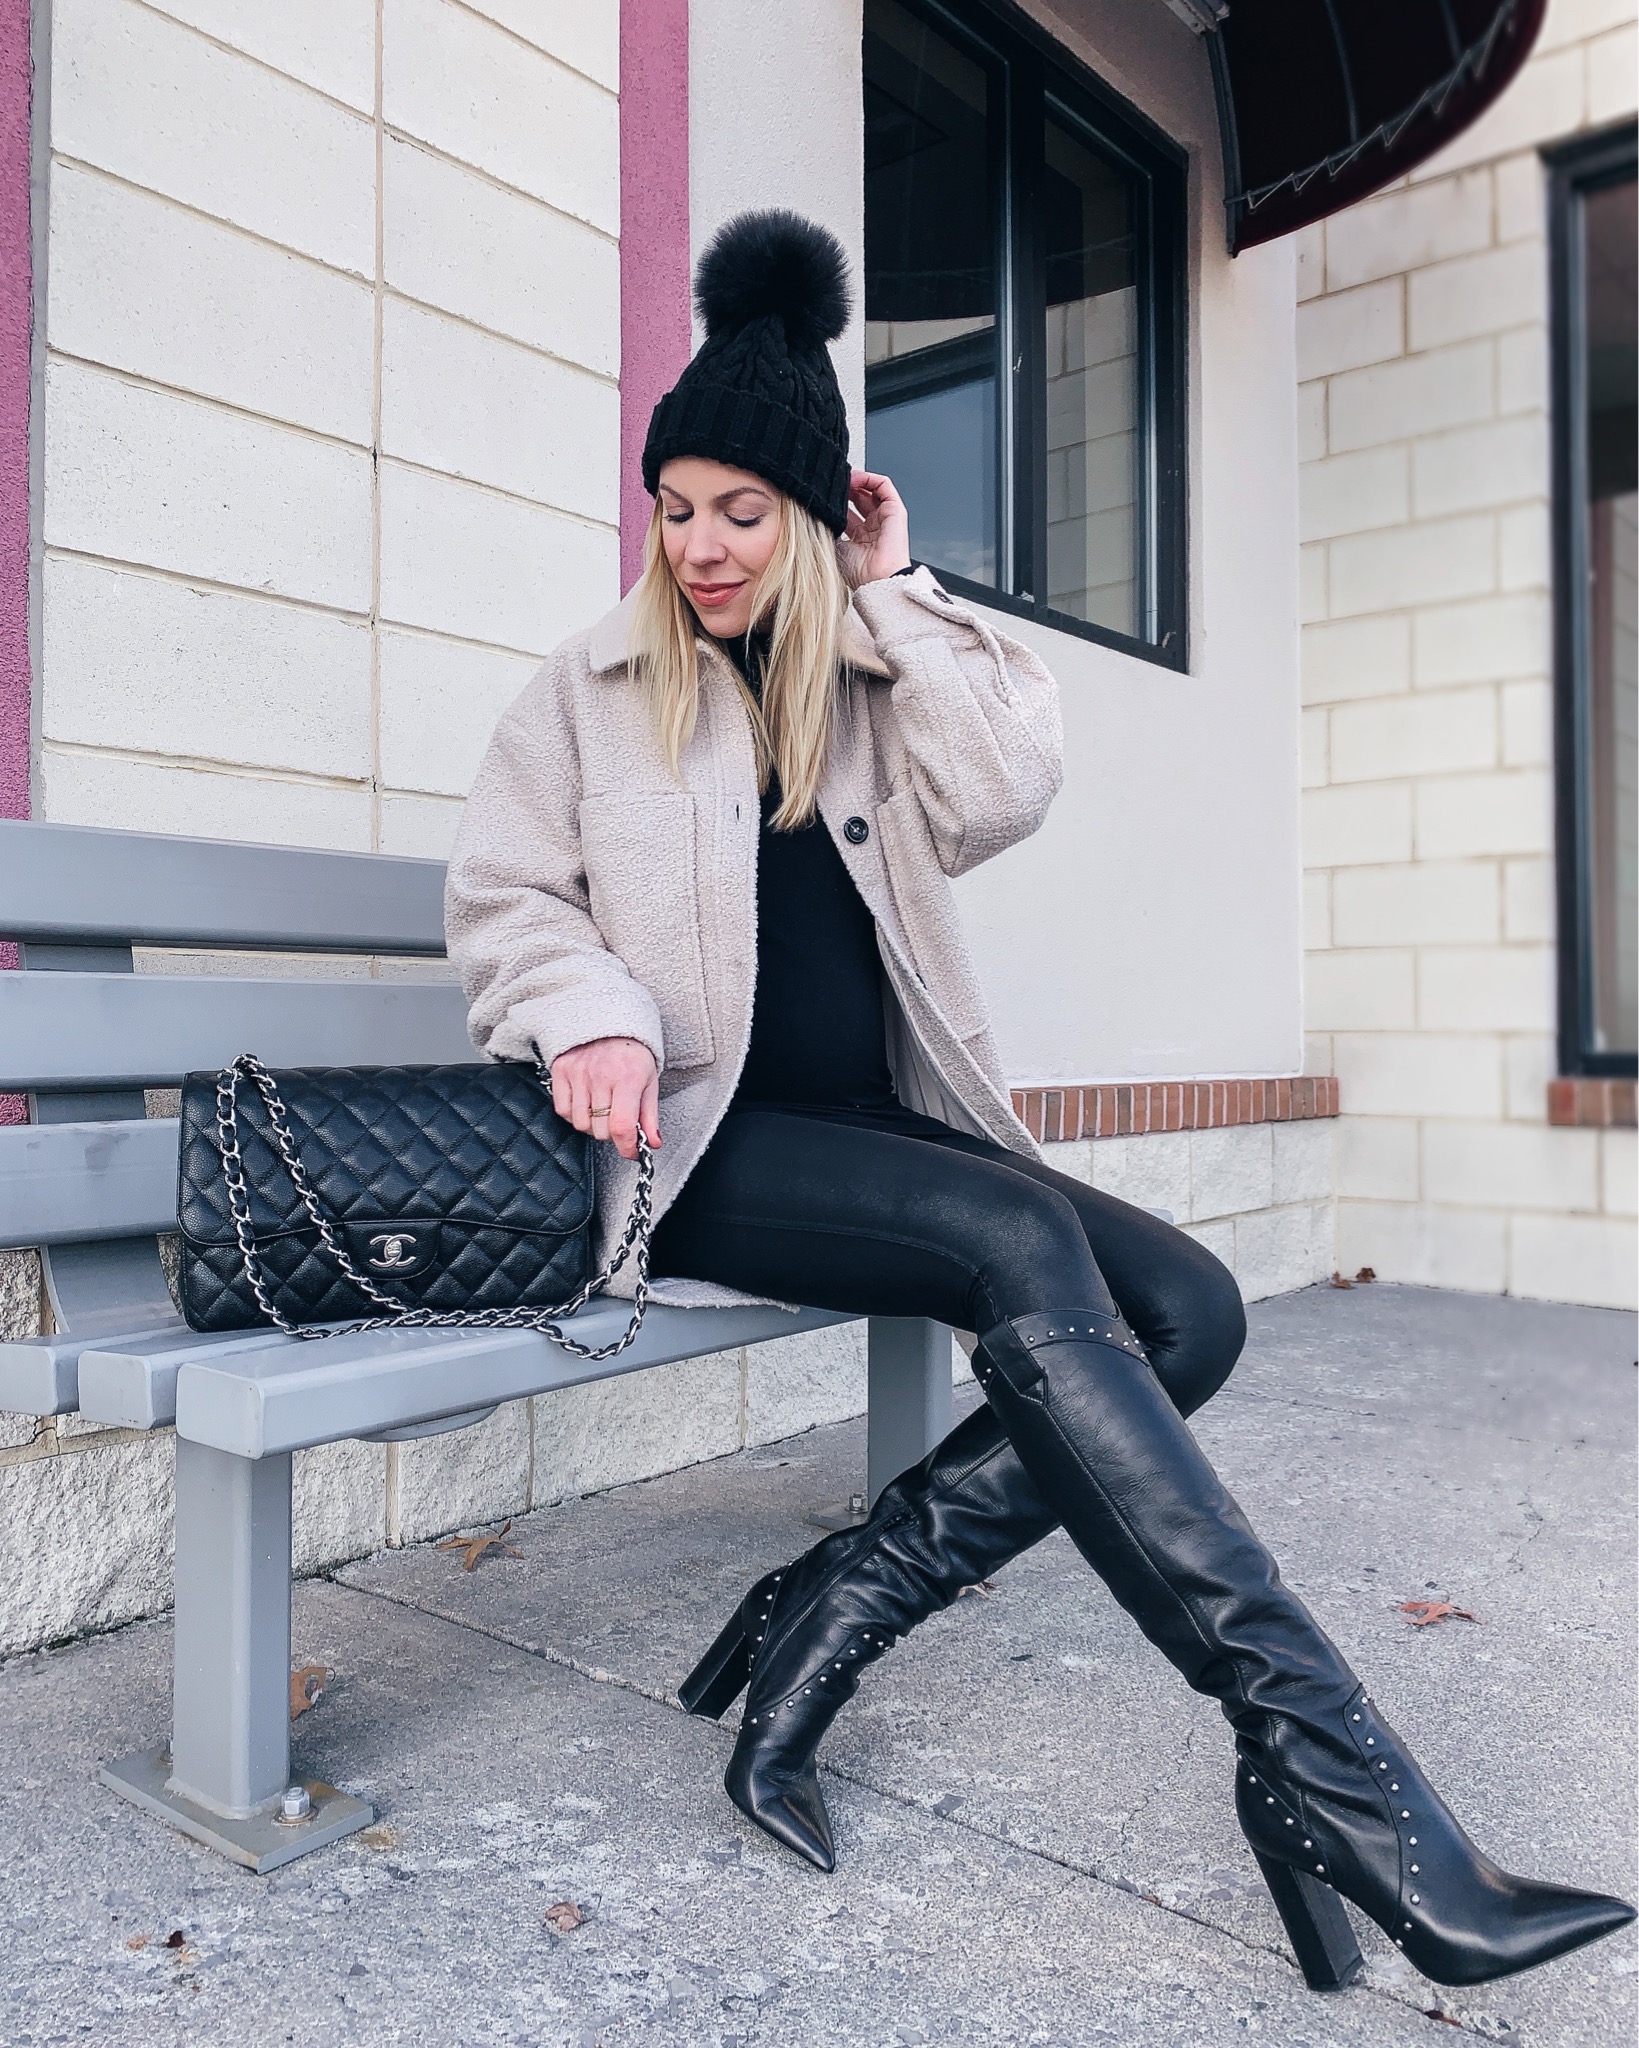 https://www.meagansmoda.com/wp-content/uploads/2021/02/Meagan-Brandon-fashion-blogger-of-Meagans-Moda-styles-Spanx-faux-leather-maternity-leggings-for-winter.jpg